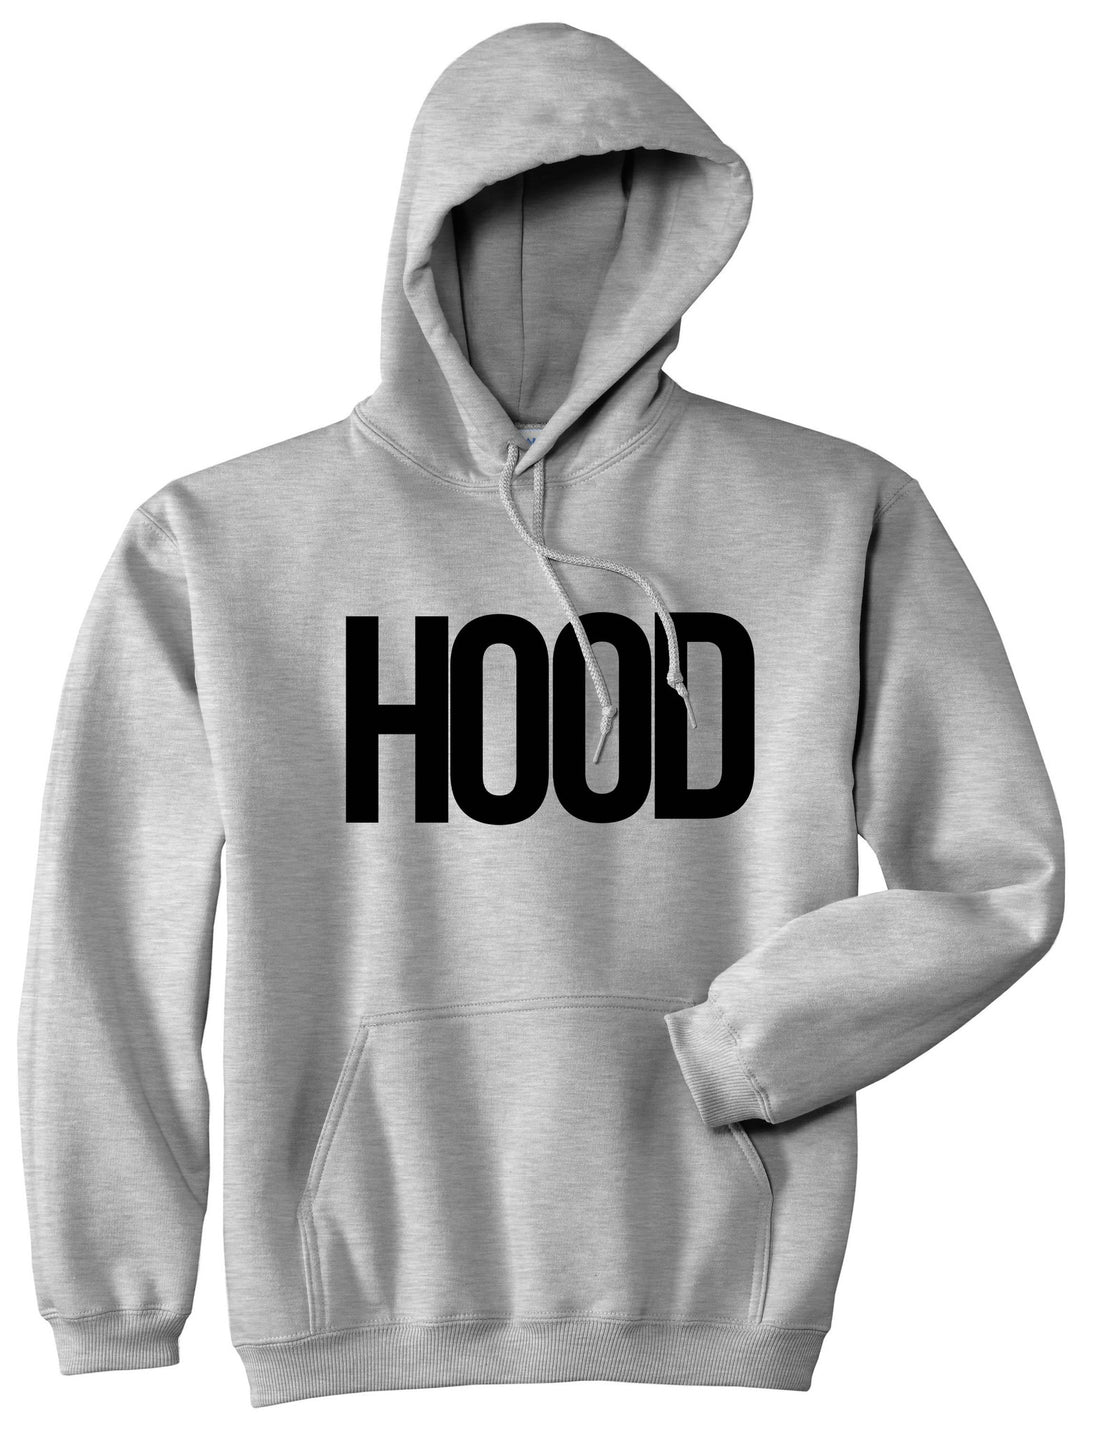 Hood Trap Style Compton New York Air Boys Kids Pullover Hoodie Hoody In Grey by Kings Of NY